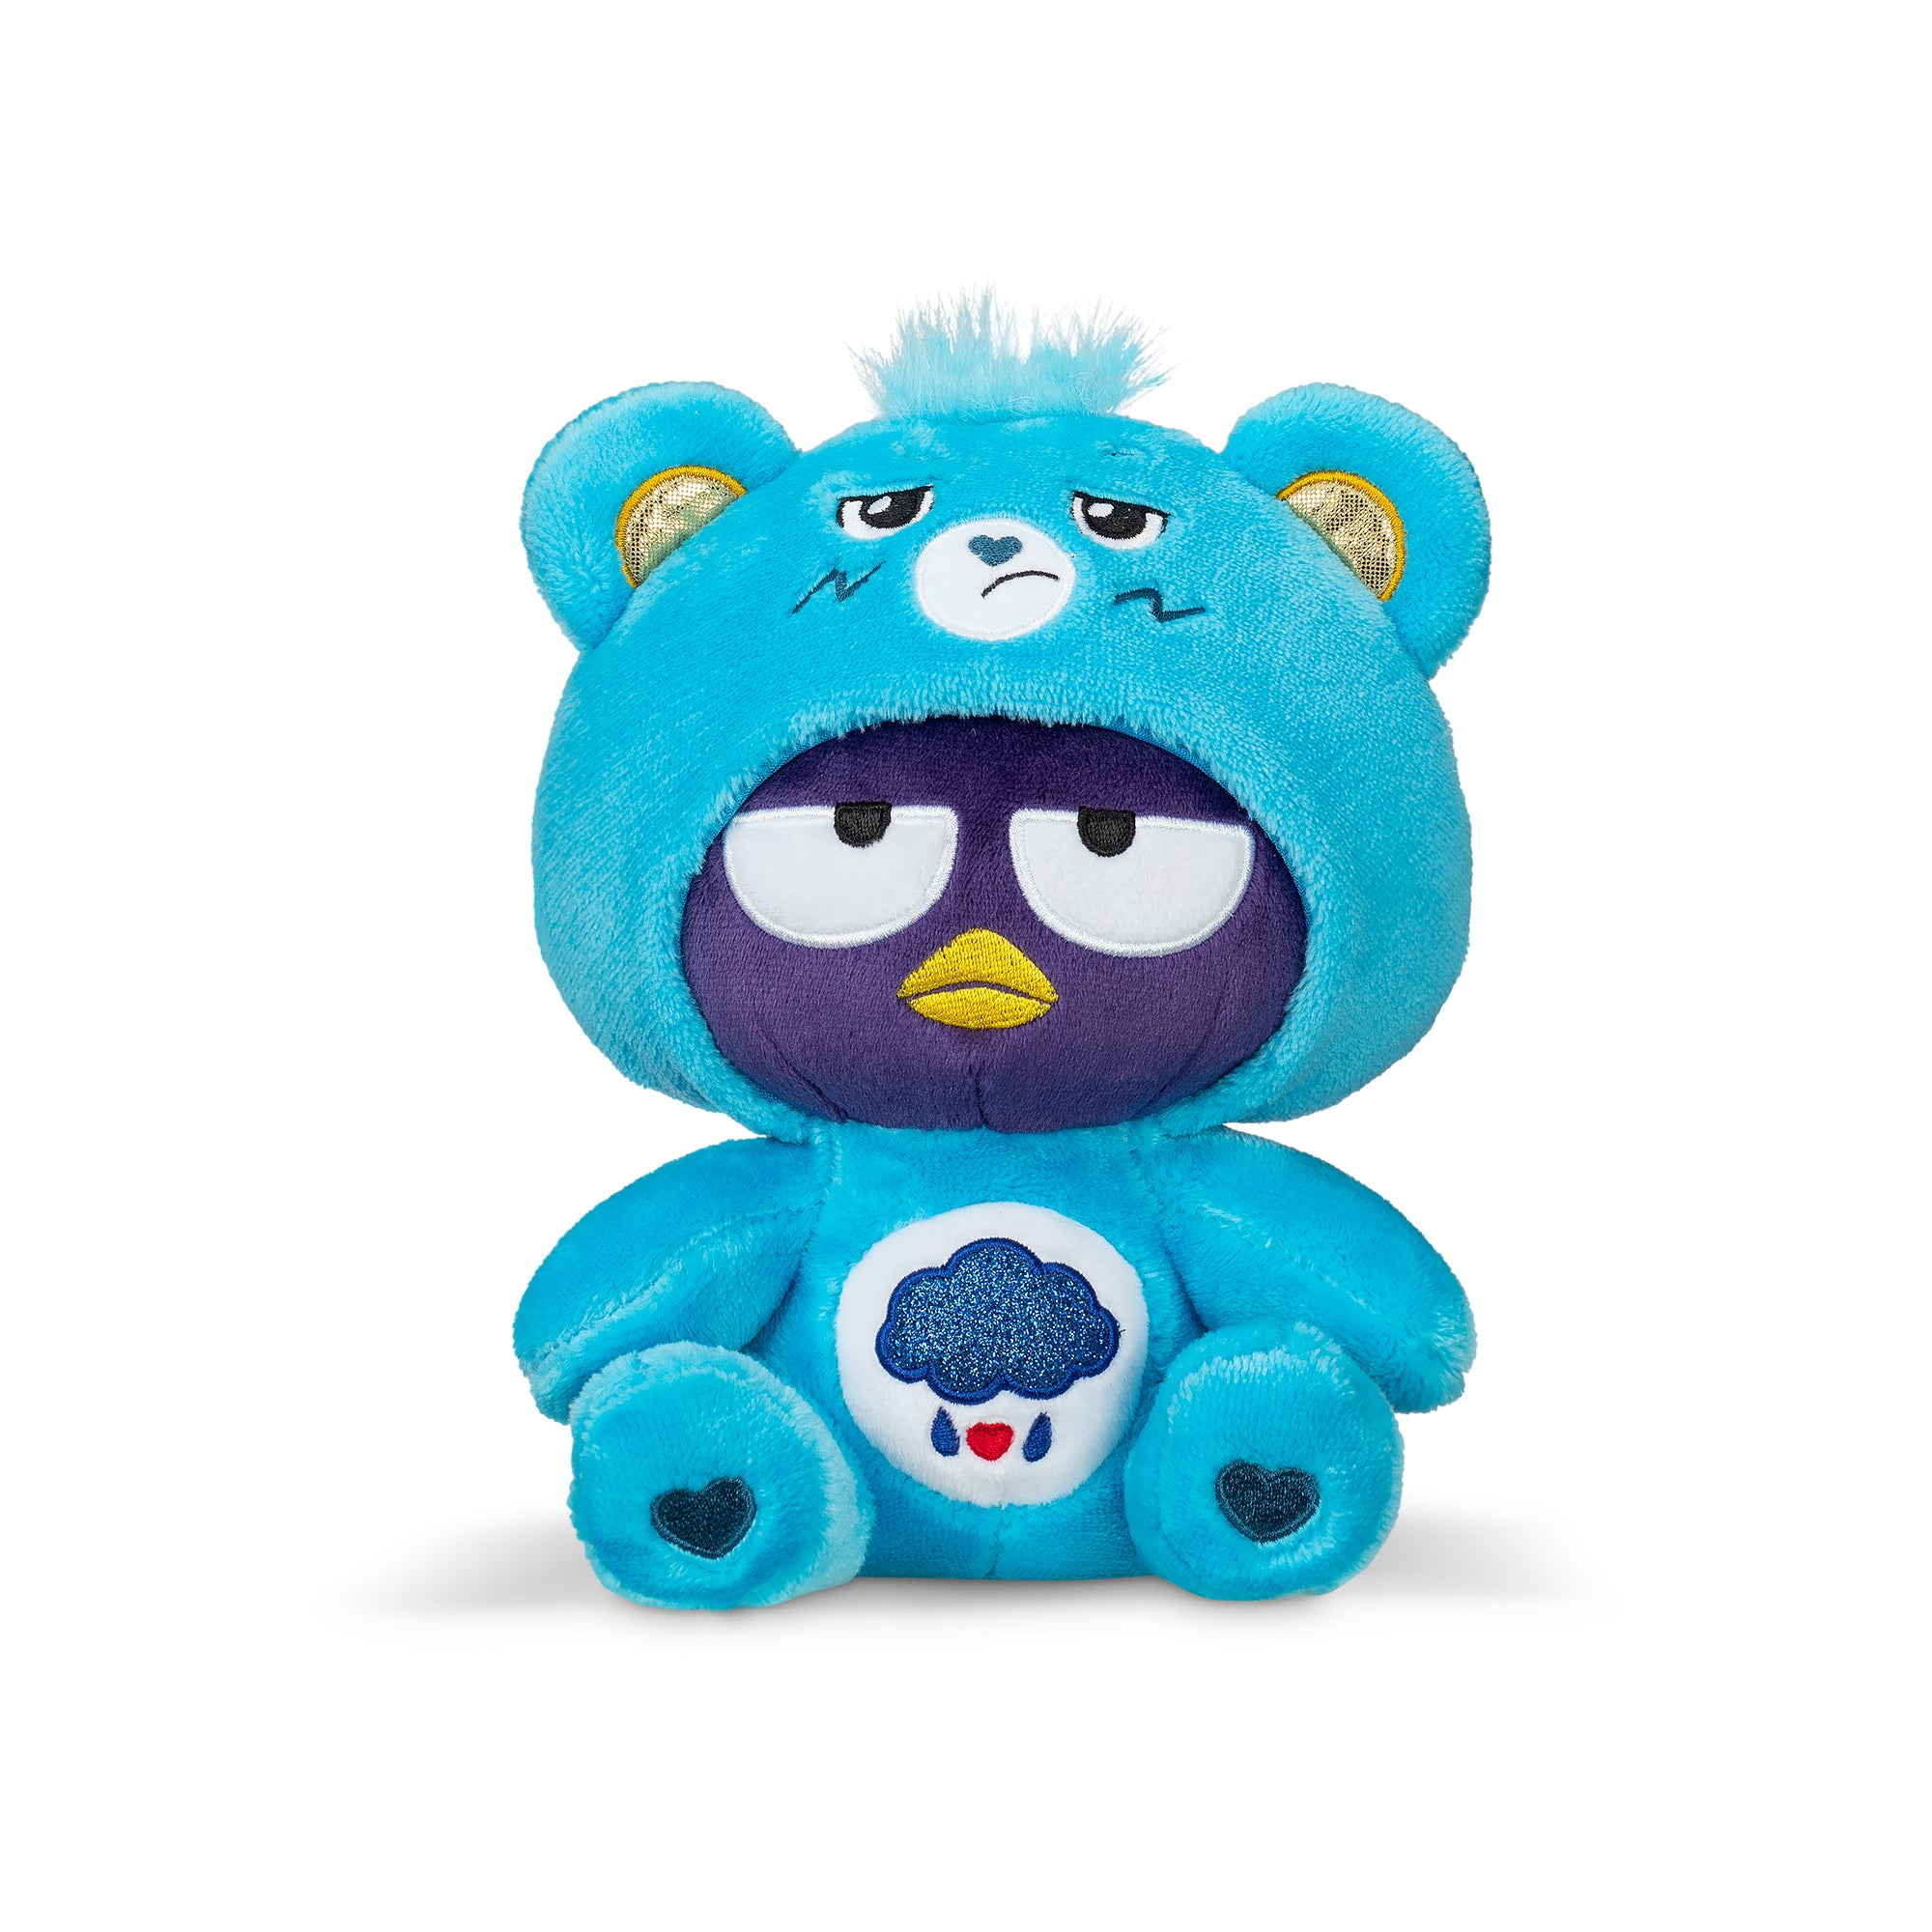 Badtz-maru x Care Bears 9" Plush (Grumpy Bear) Plush Basic Fun Inc   